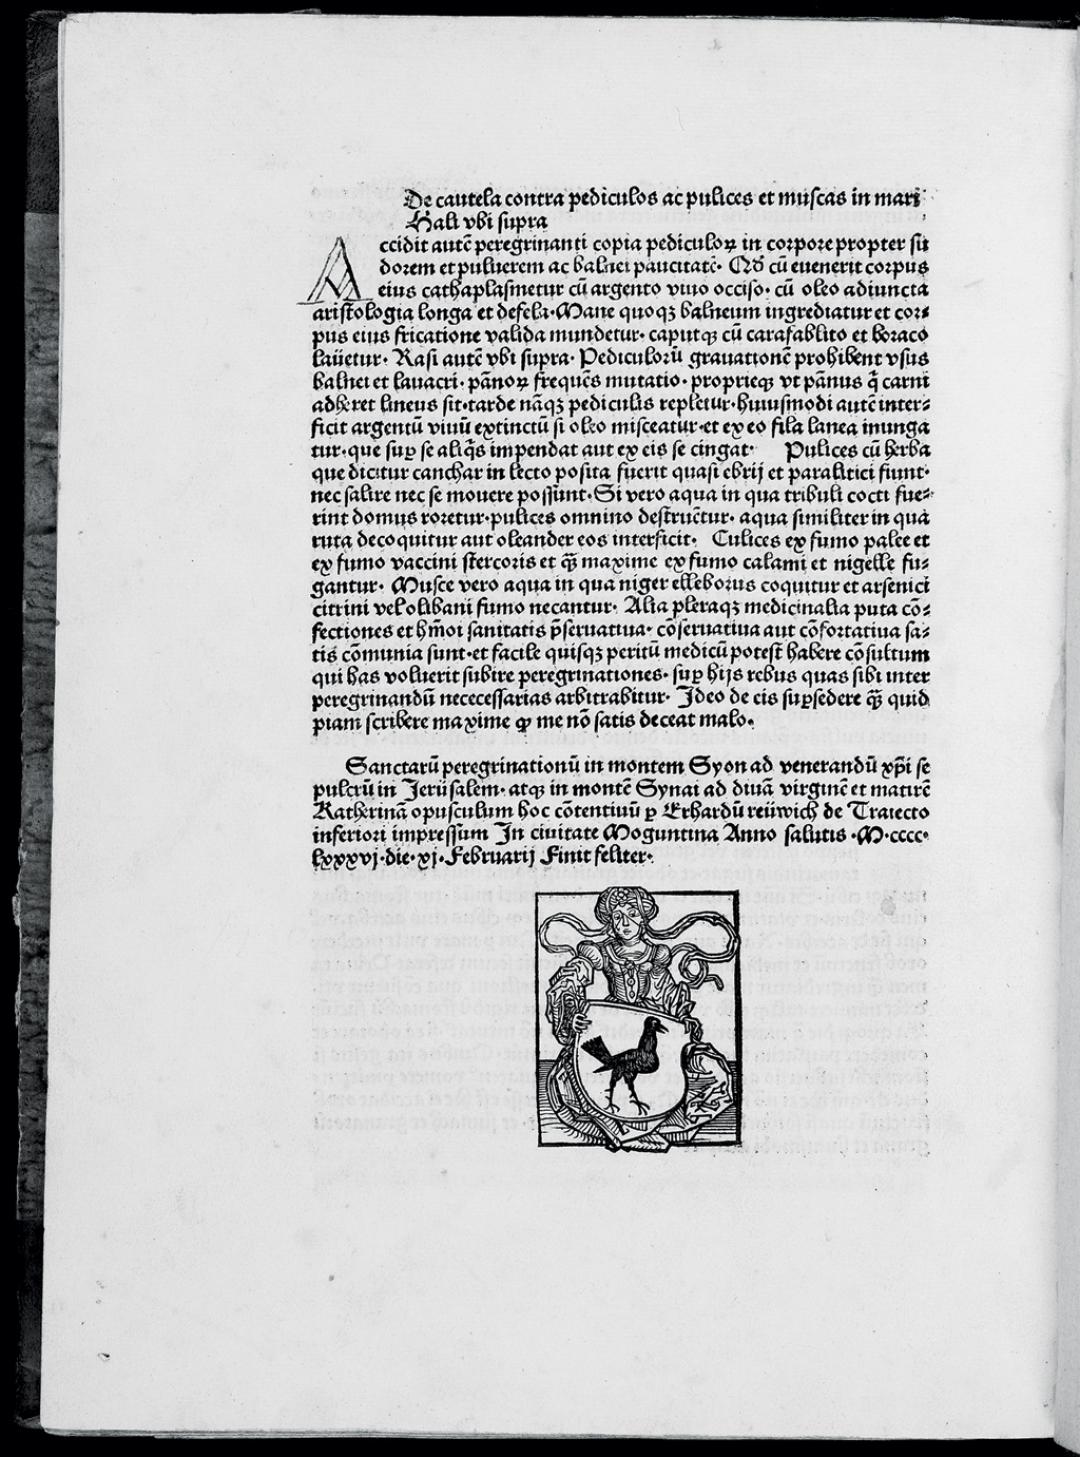 Erhard Reuwich – Printer’s Mark from Peregrinatio Latin, fol. 163v.